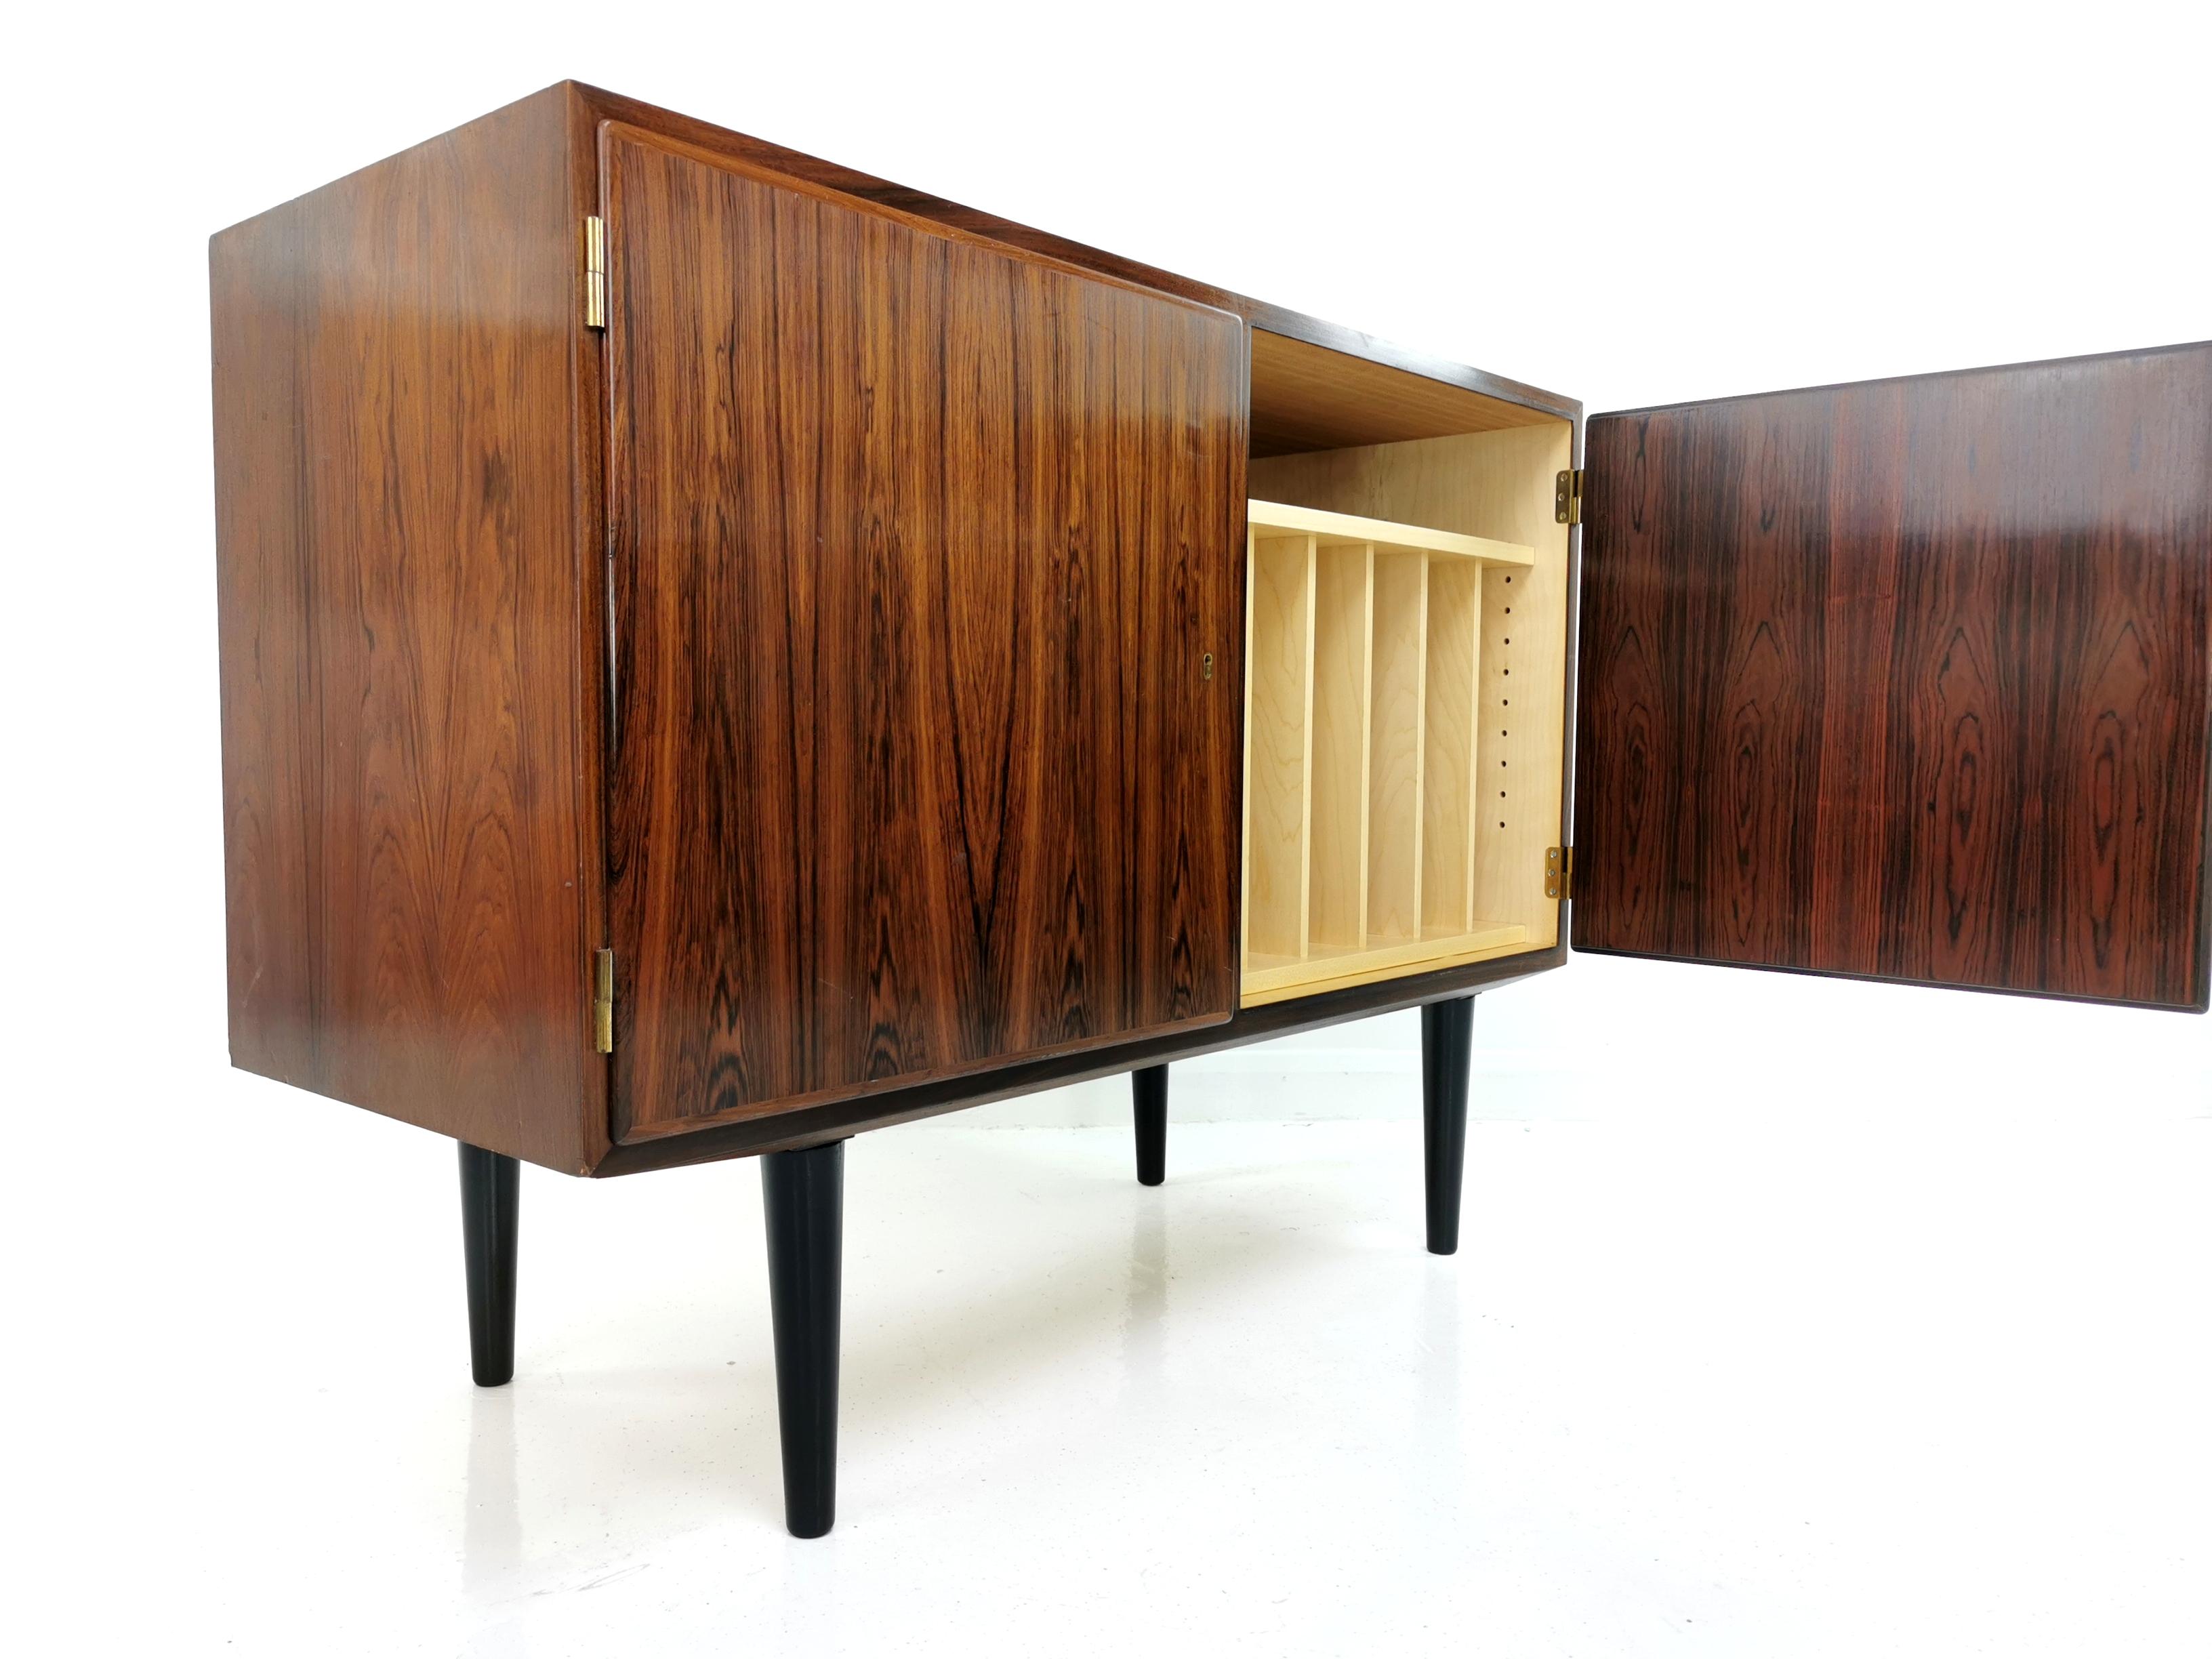 Danish Hundevad Rosewood Media Unit Sideboard 1970s Midcentury Vintage Cabinet 1